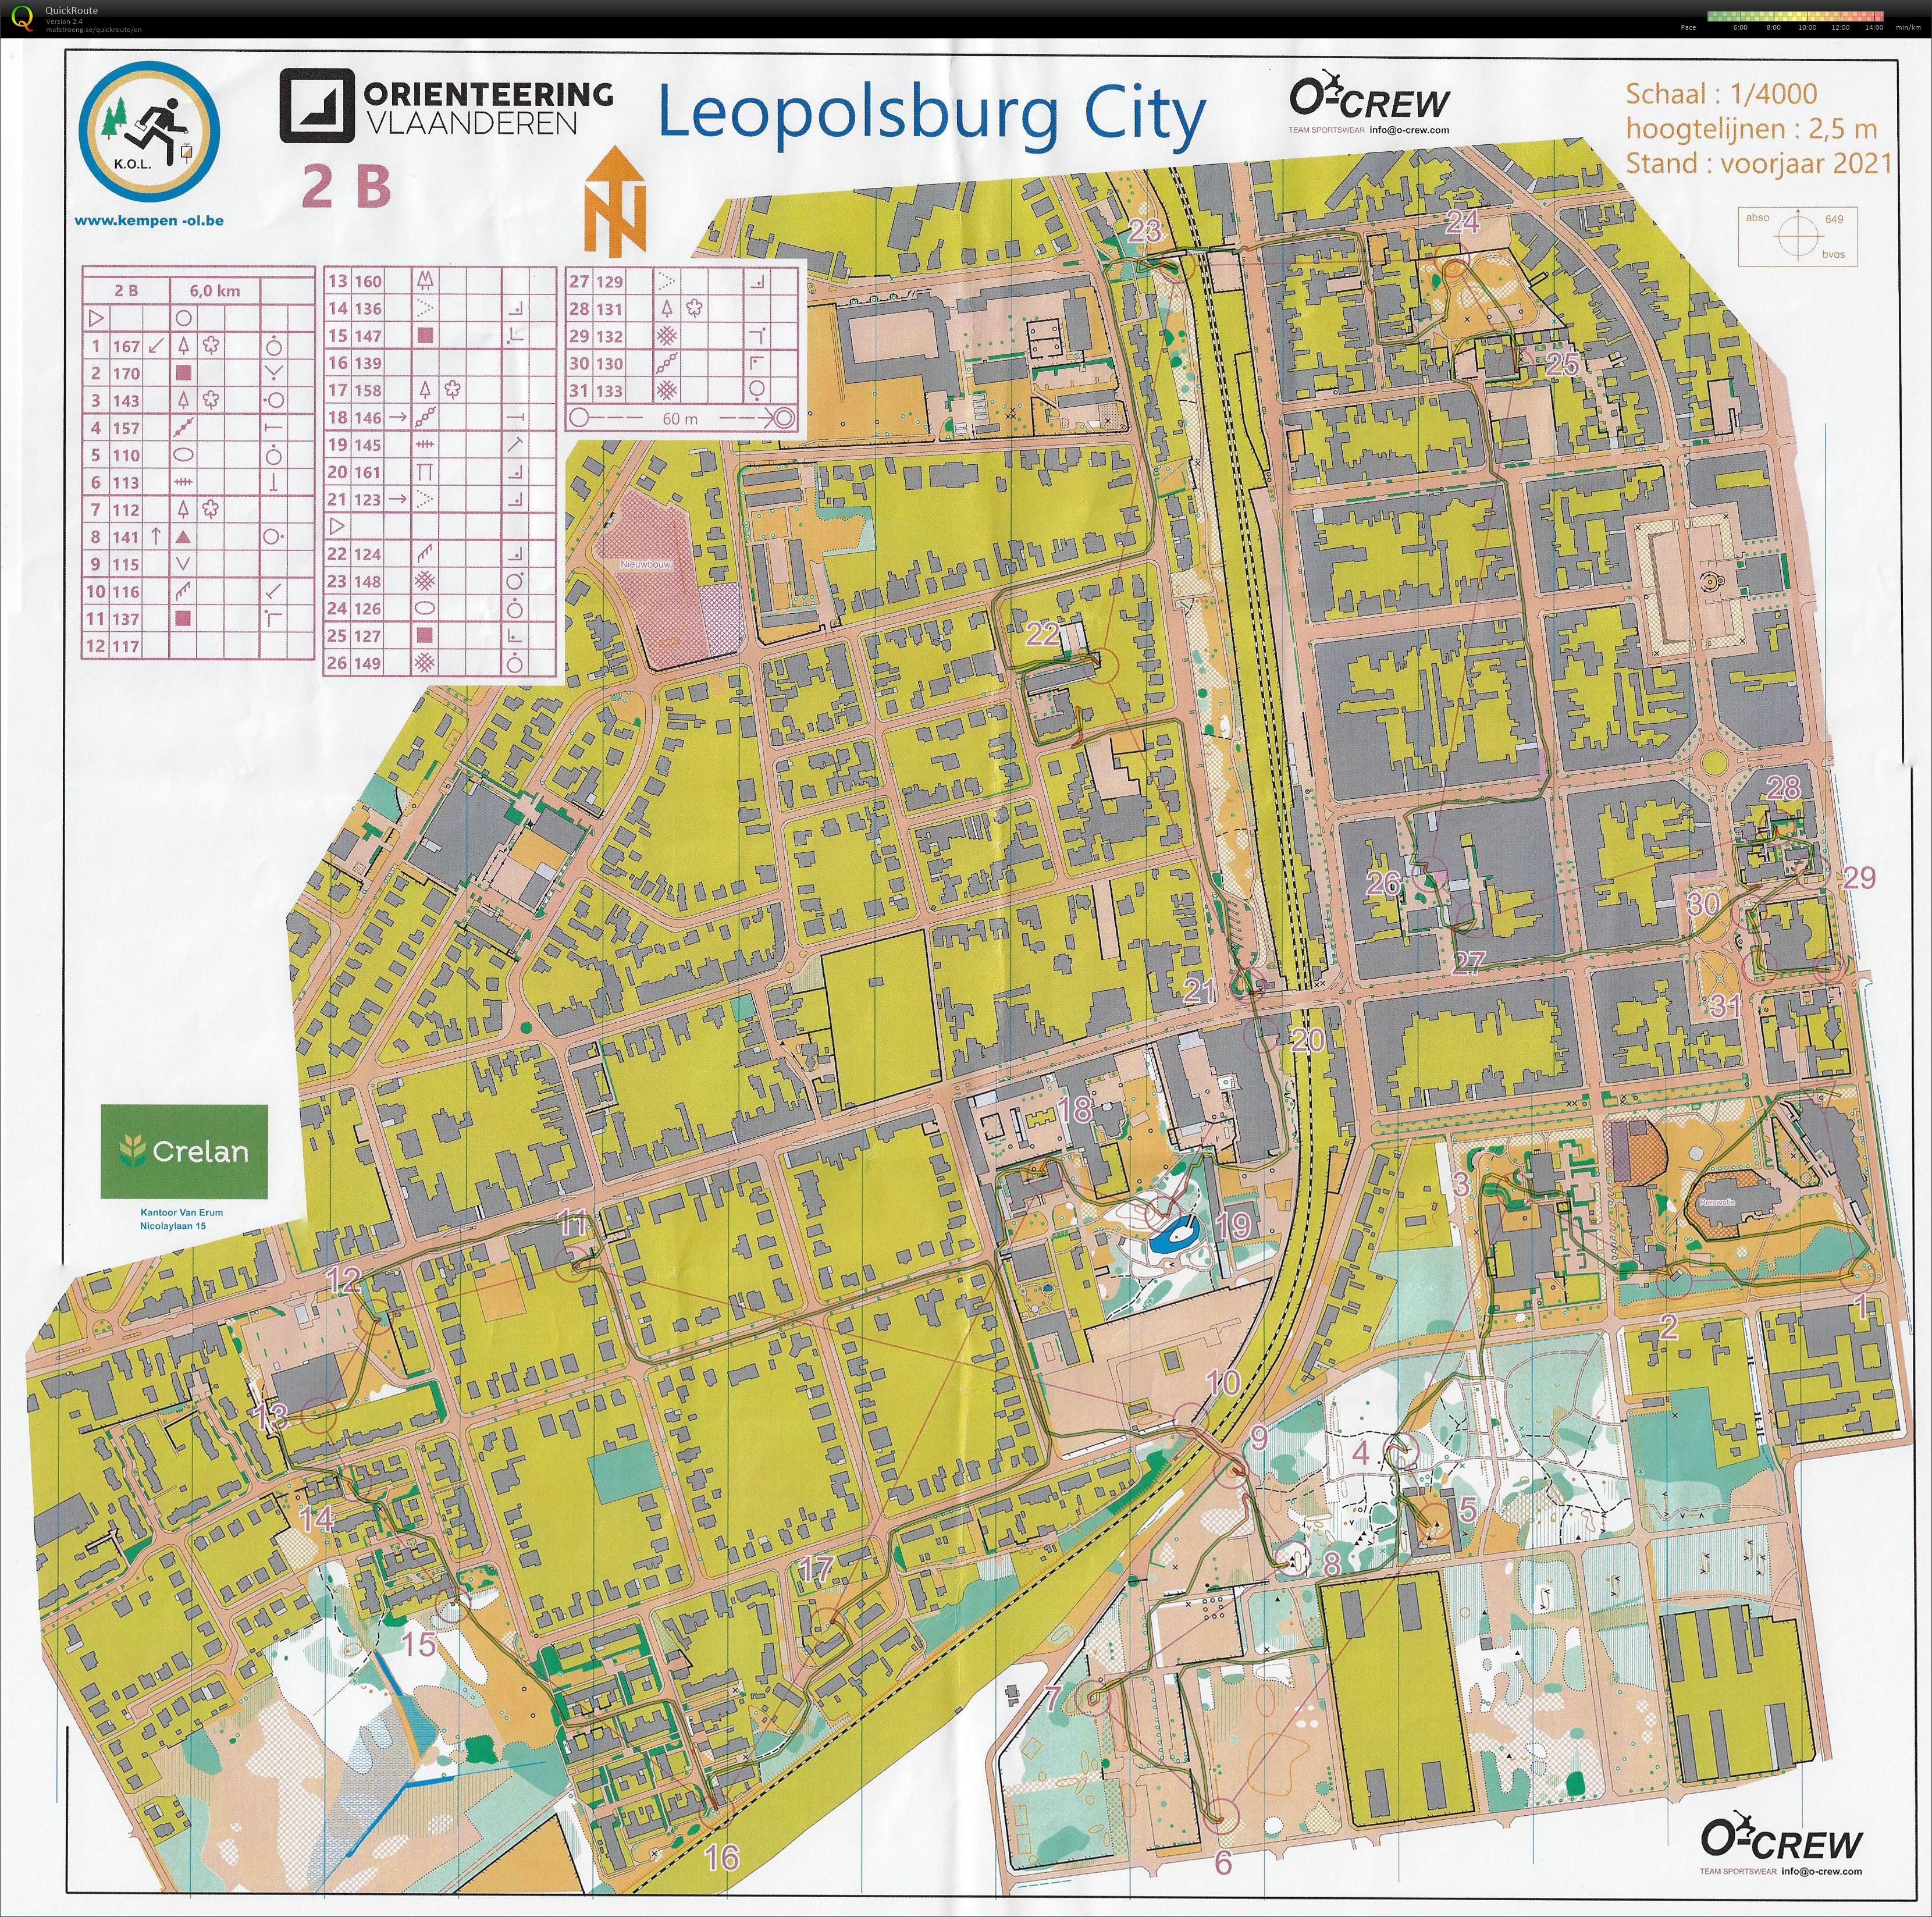 Leopoldsburg City (06/06/2021)